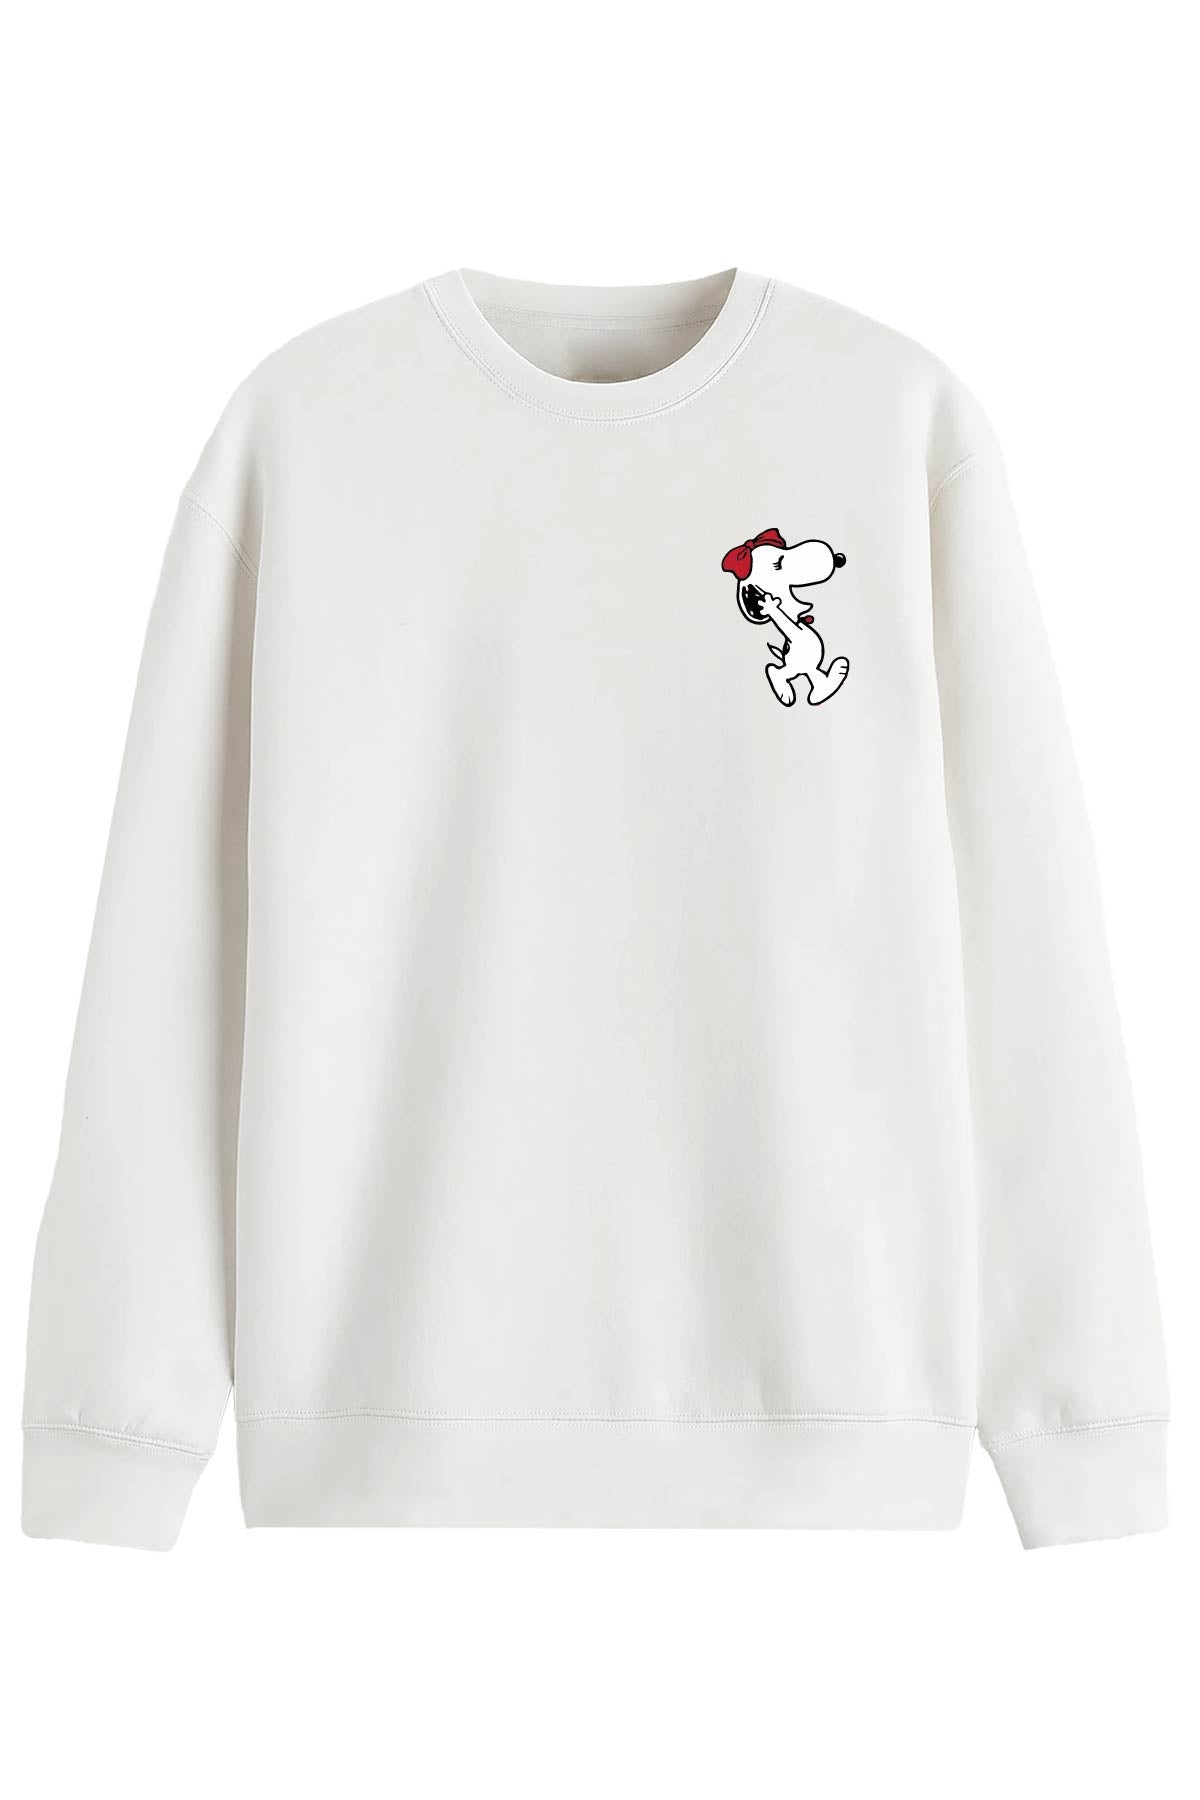 Peanuts/ Snoppy Love -  Sweatshirt